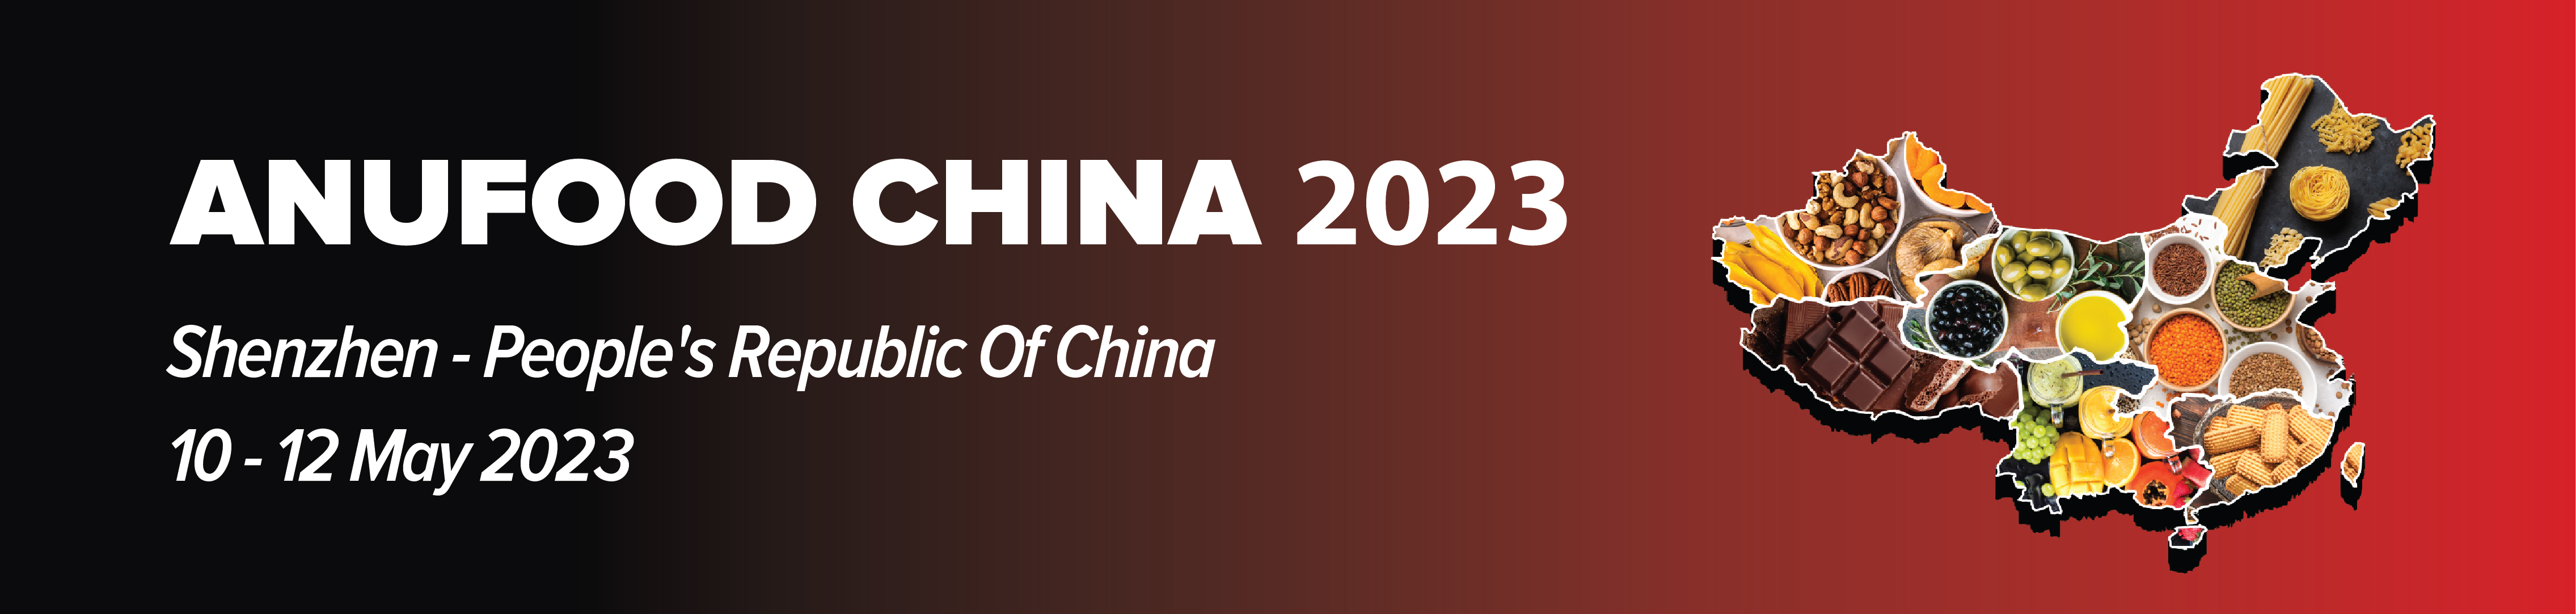 ANUFOOD CHINA 2023